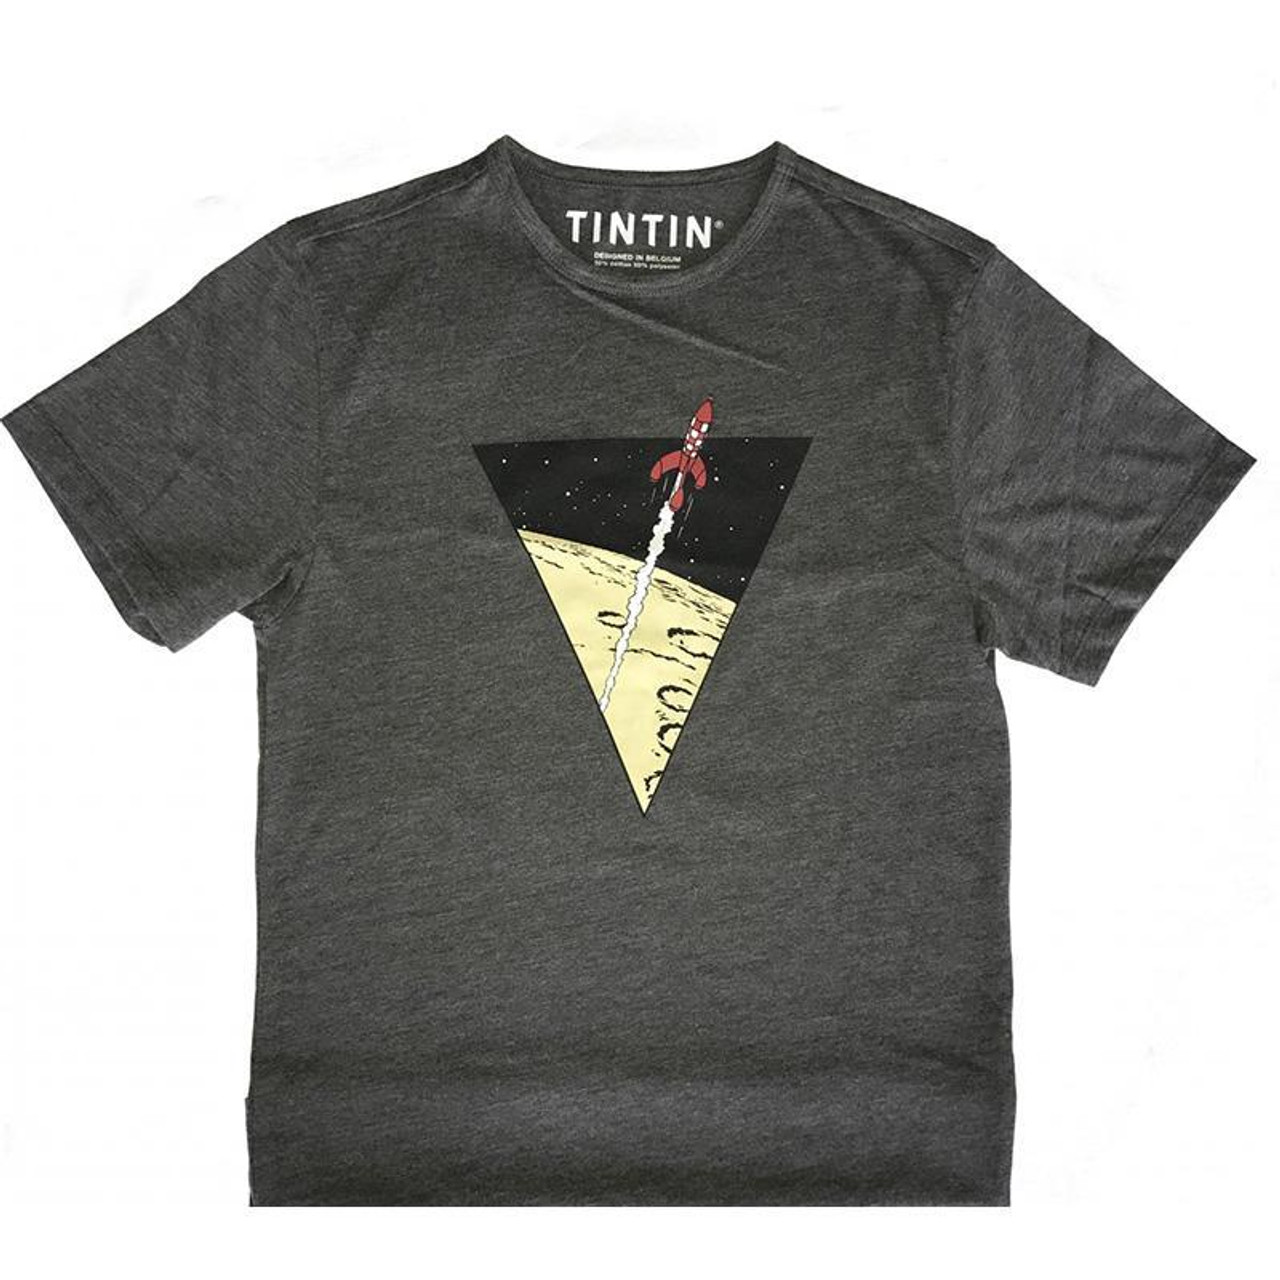 TINTIN T-SHIRT GREY TRIANGLE ROCKET  XXL